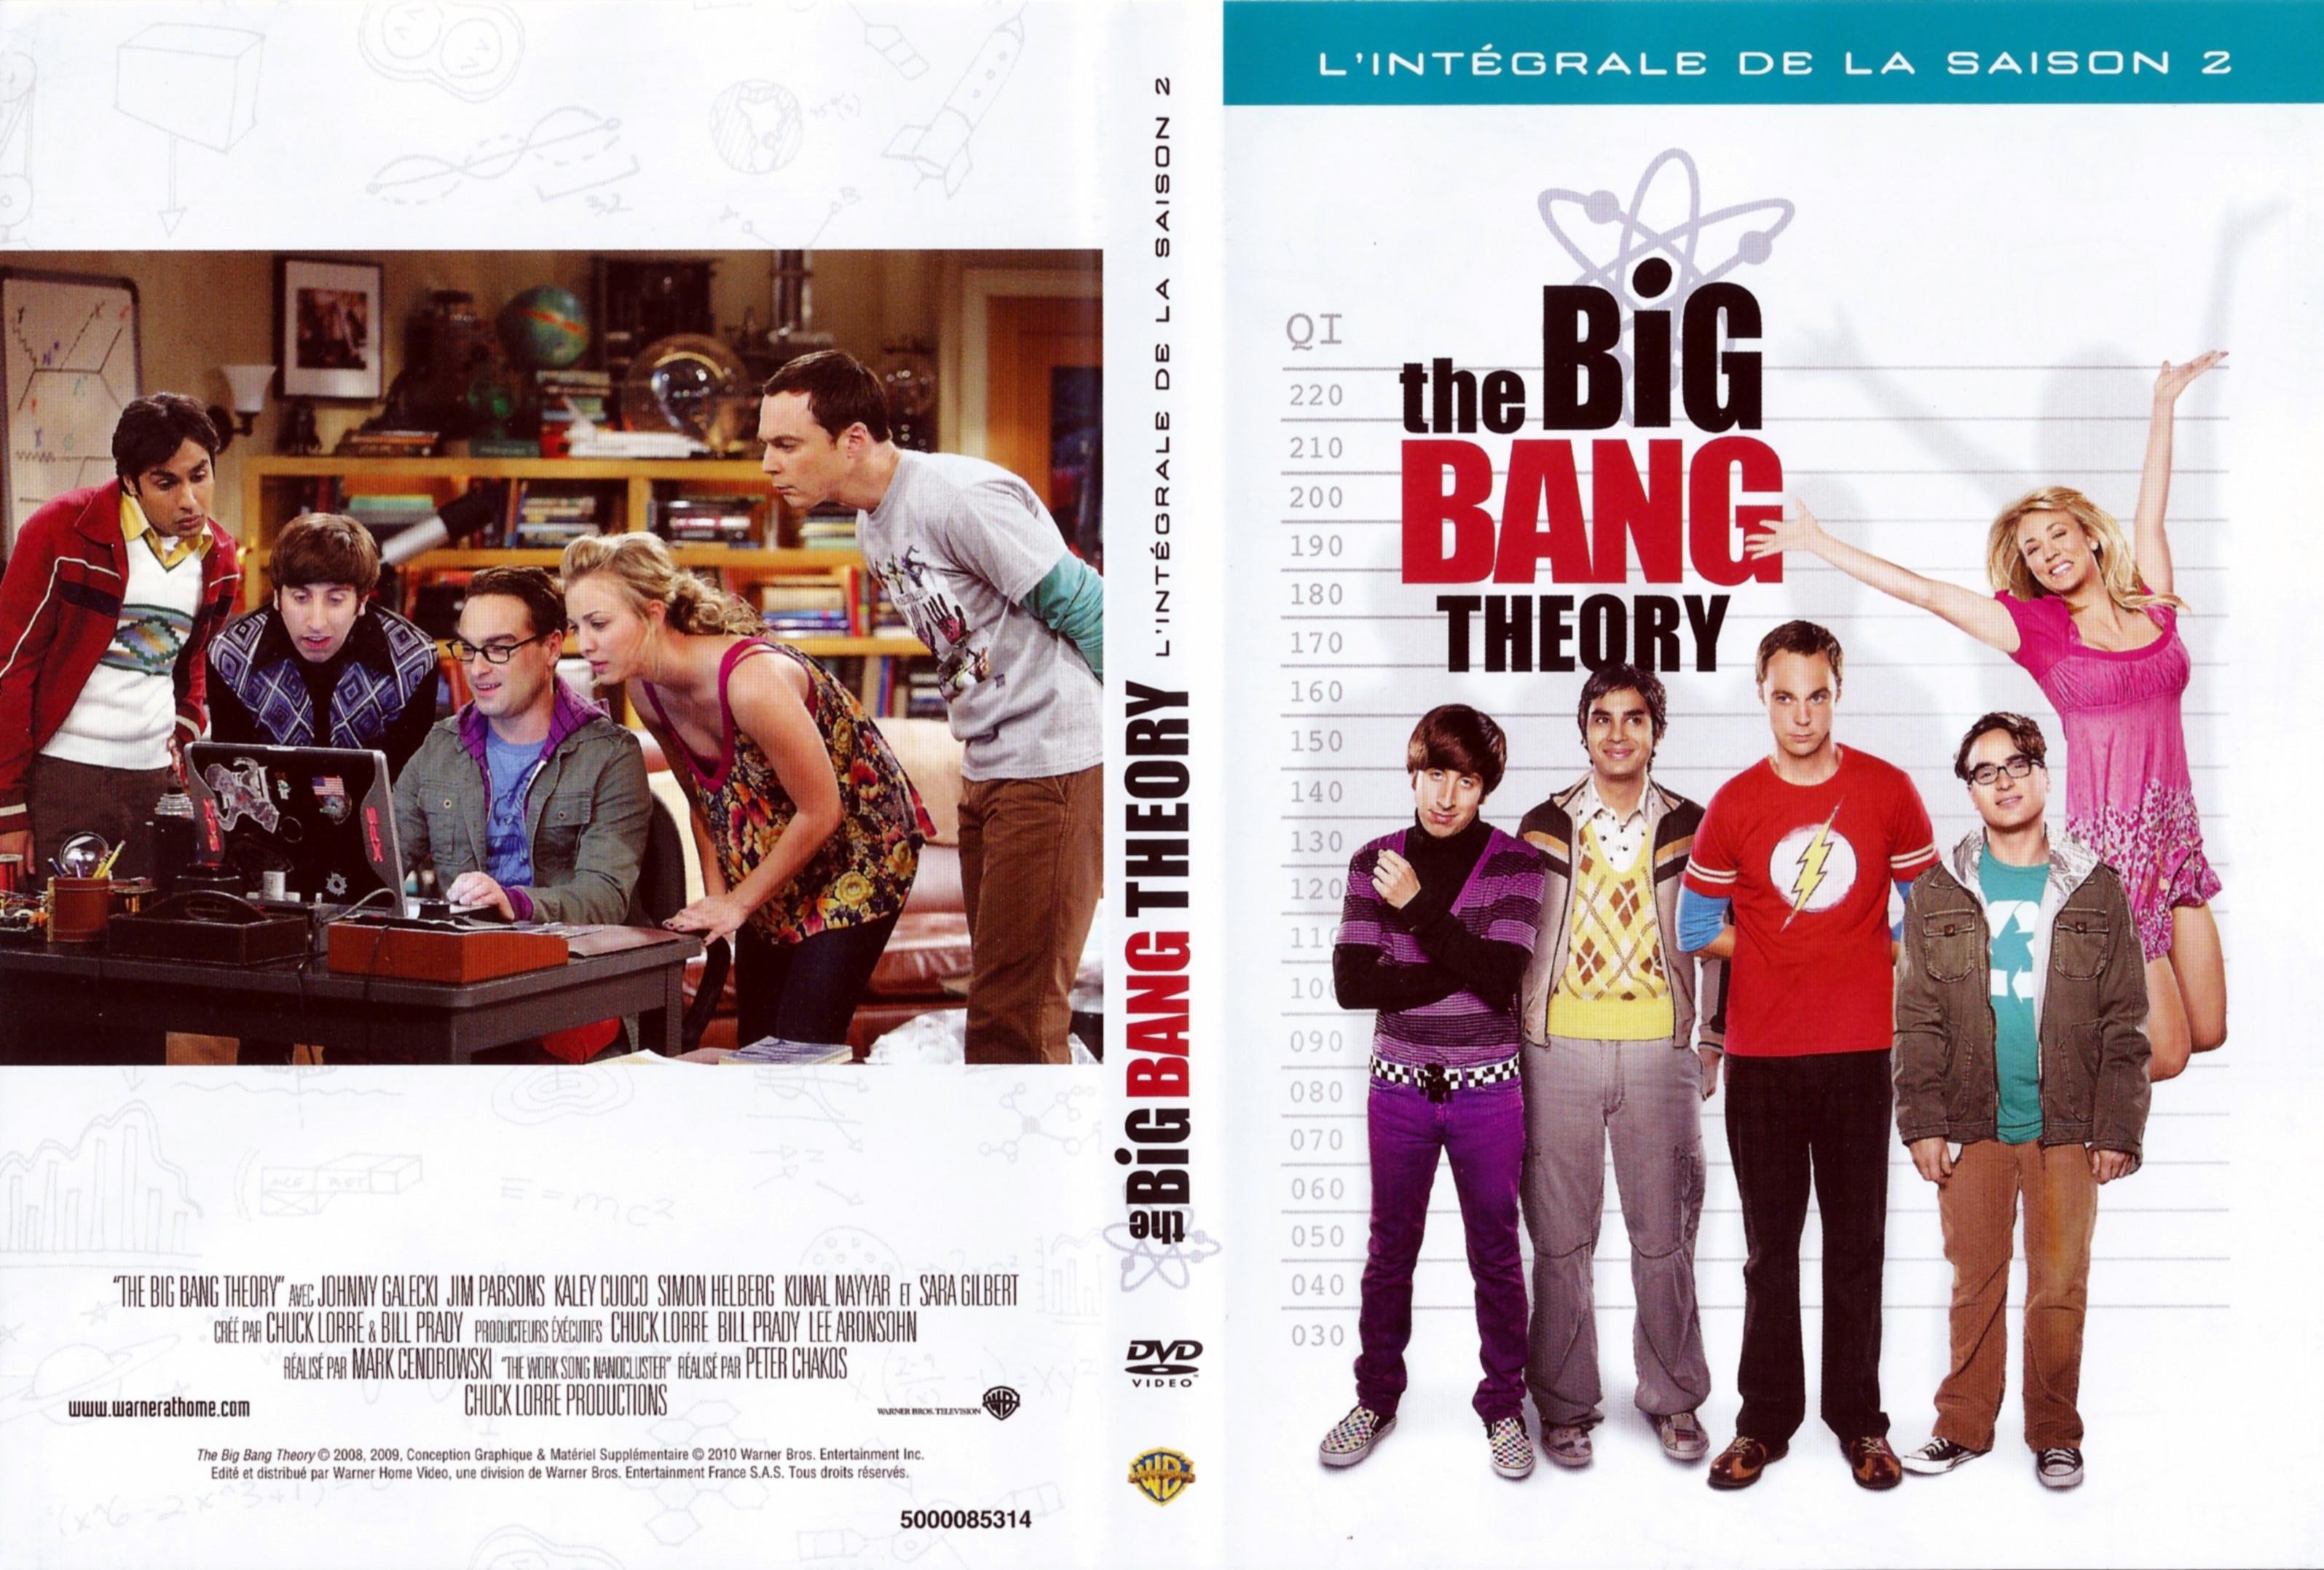 Jaquette DVD The Big Bang Theory Saison 2 v2